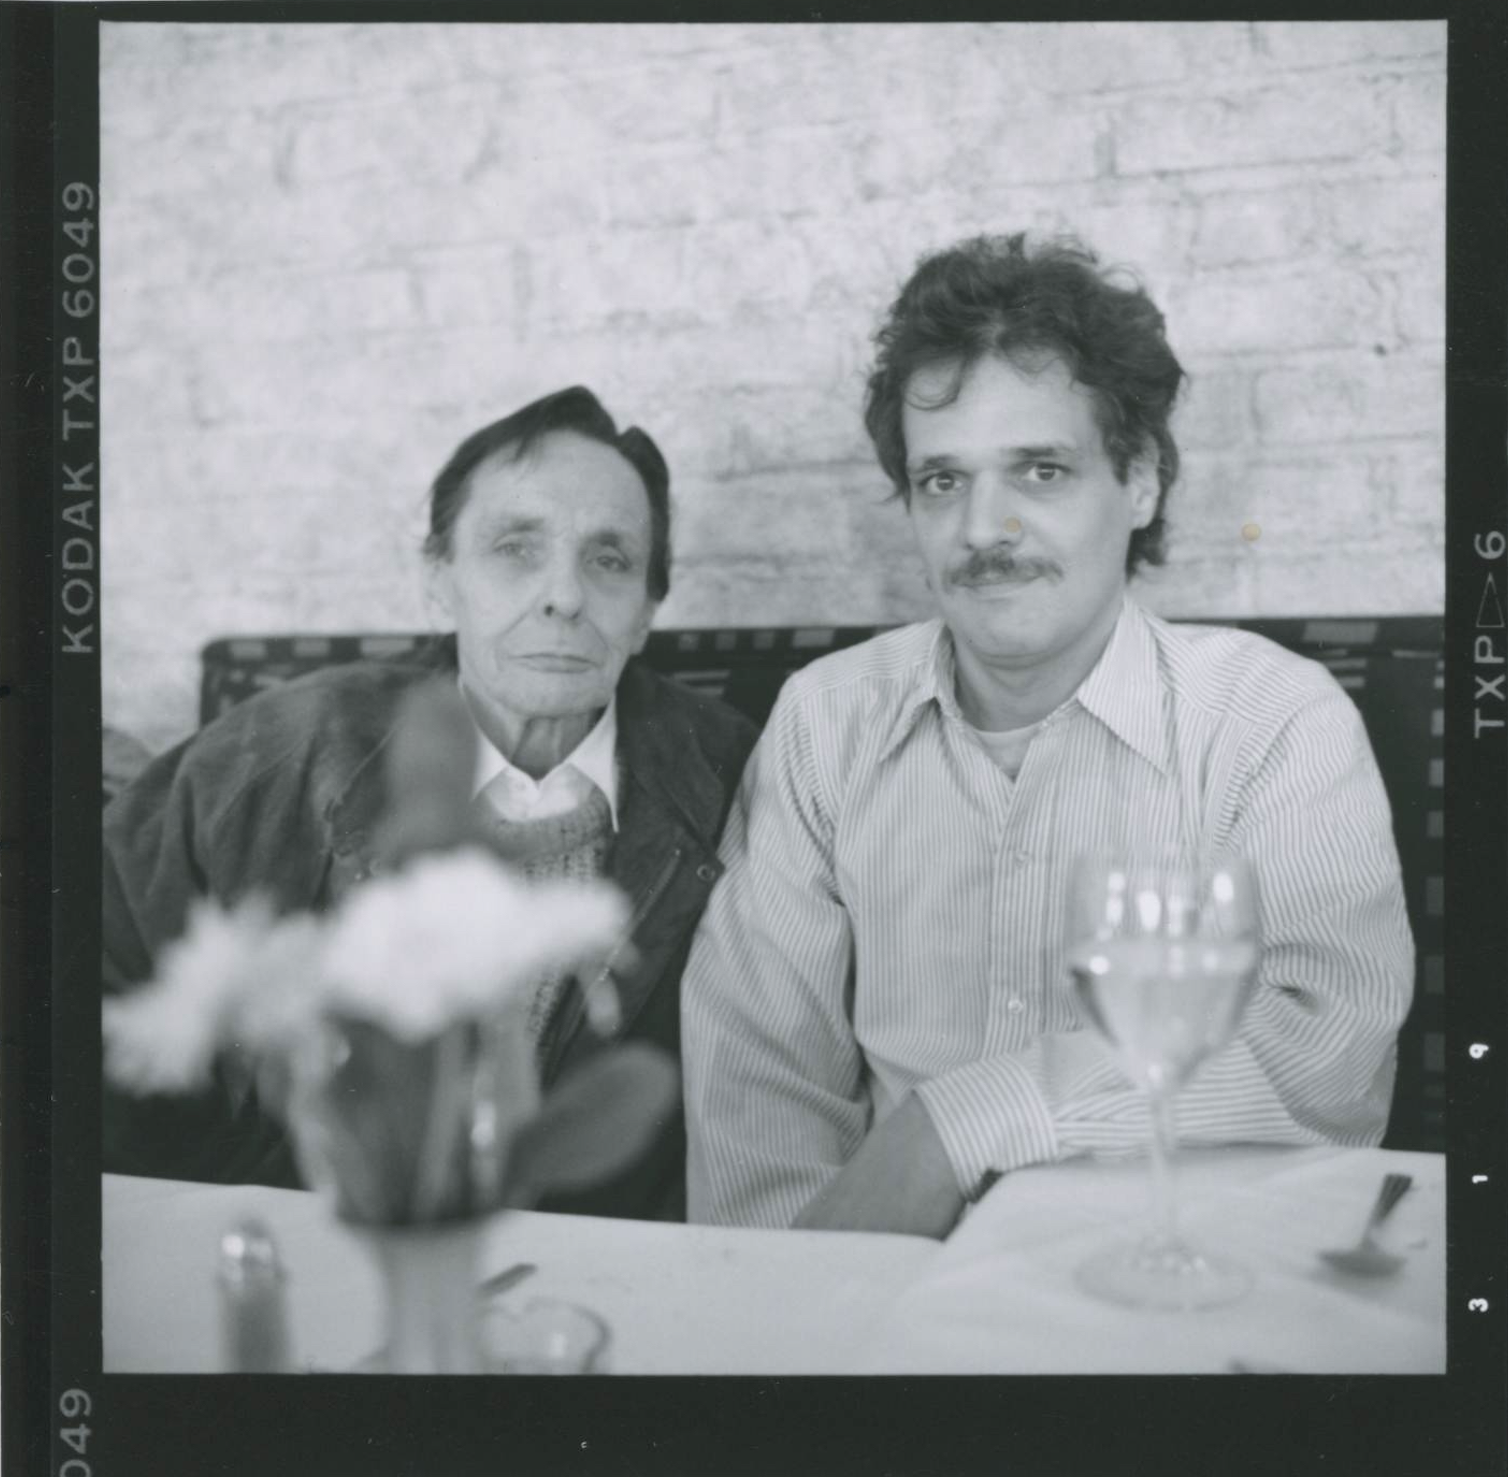 Herbert Huncke and Louis Cartwright, at Indian restaurant banquet for Hanuman Press, November, 1989 Photograph by Allen Ginsberg, (c) The Estate of Allen Ginsberg